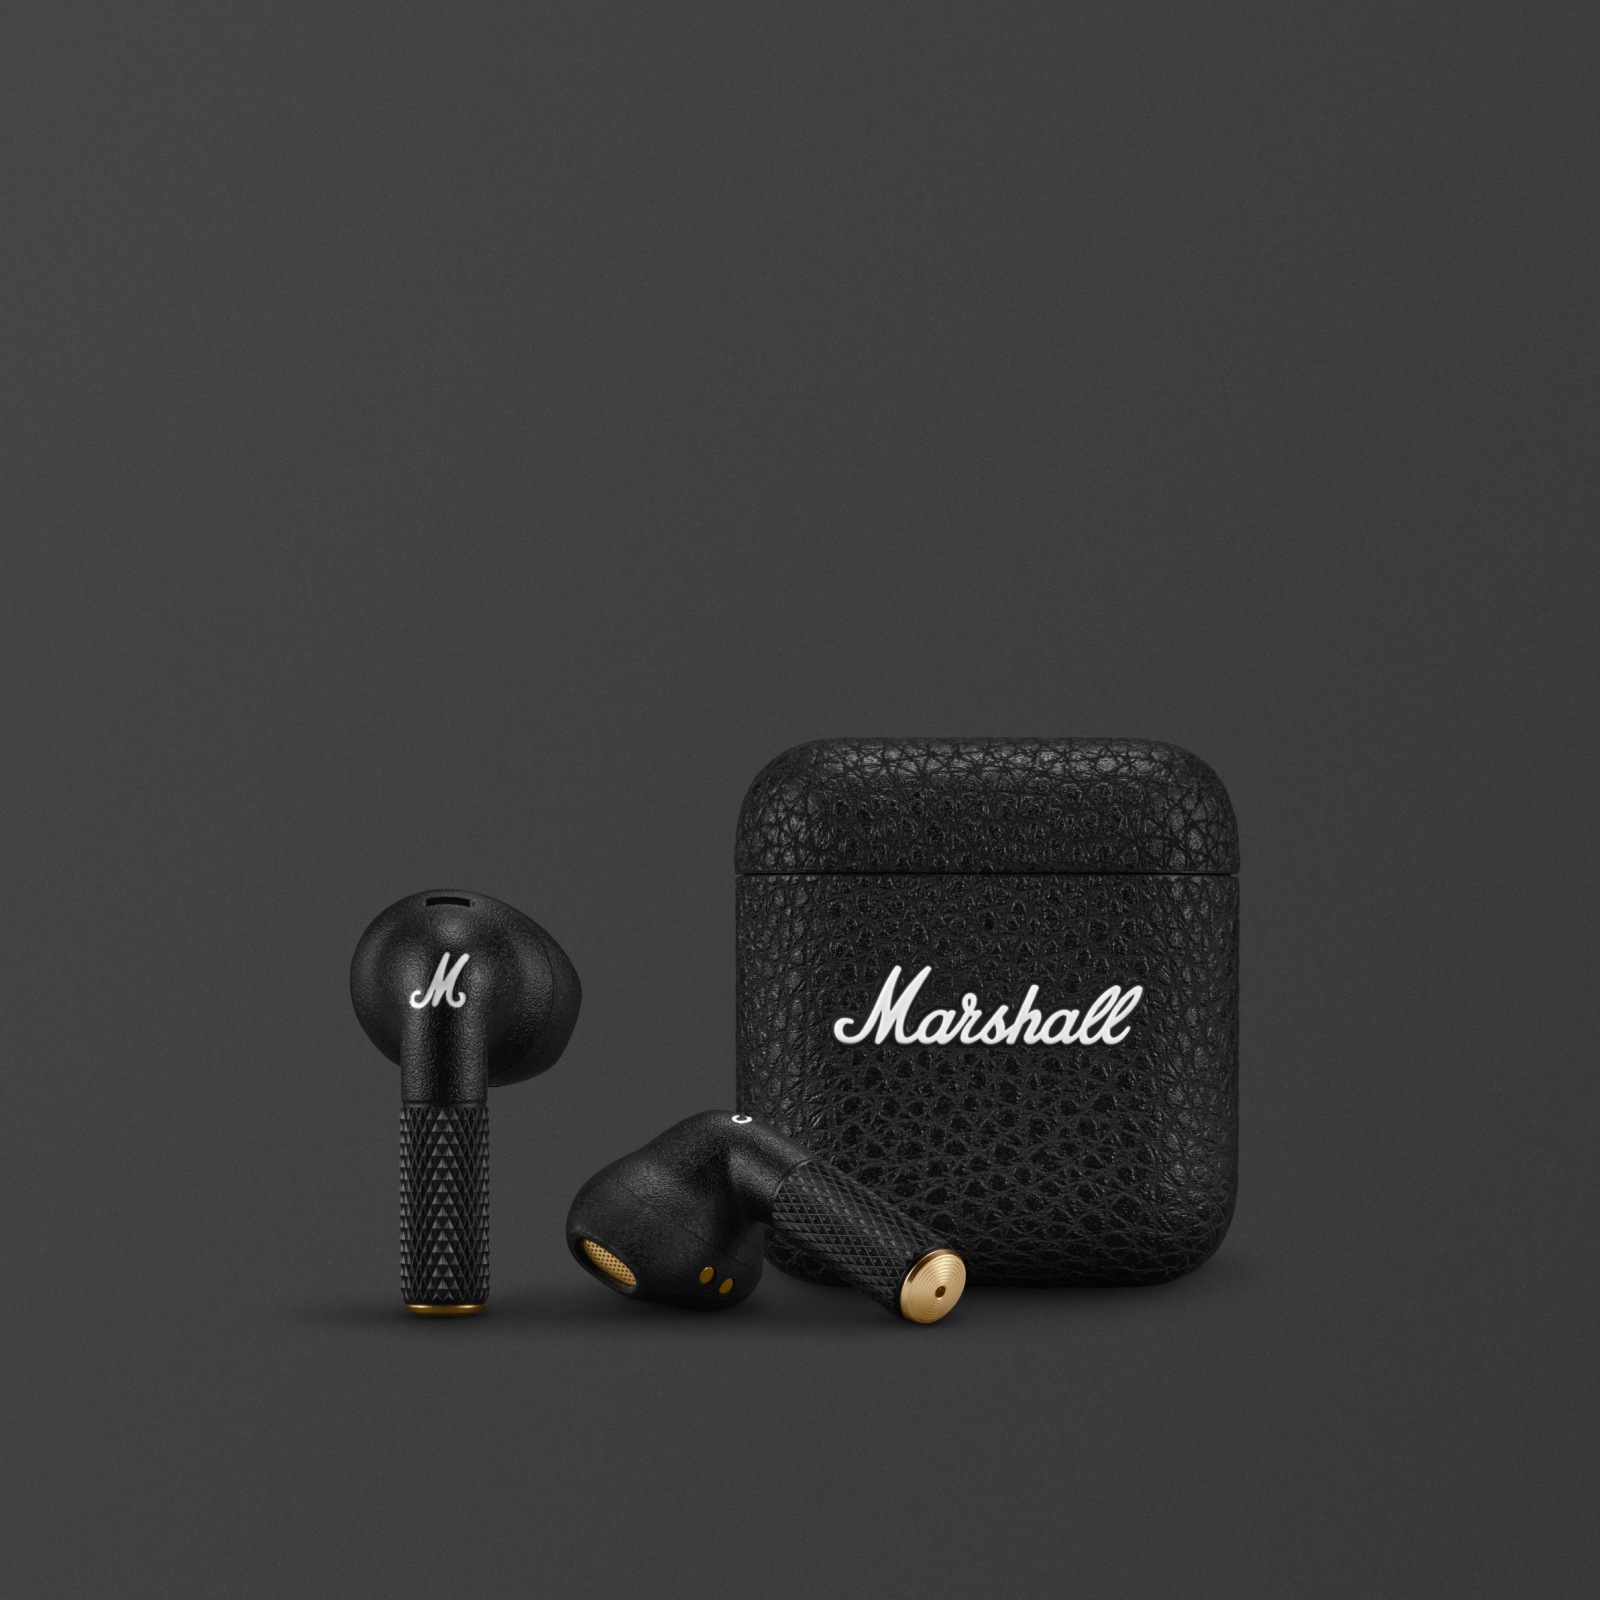 Marshall Minor IV true wireless earbuds in black.